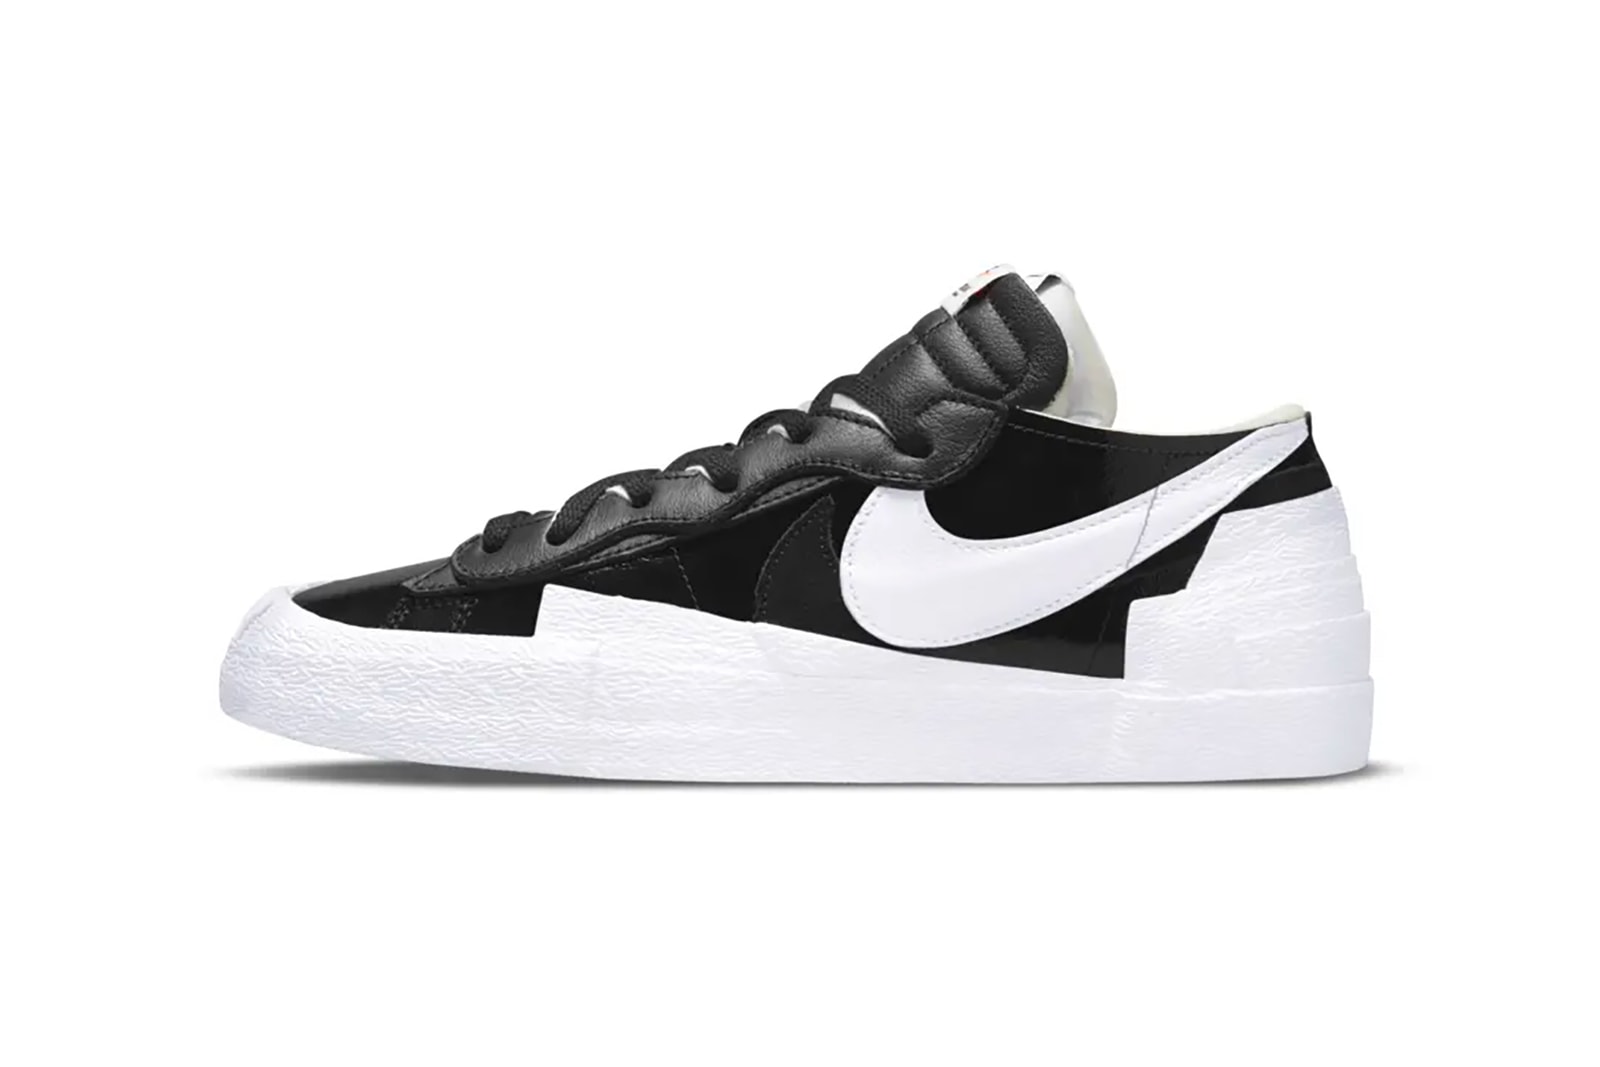 sacai Nike Blazer Low White Black Patent Leather telfar Lavendar Shopping Bag